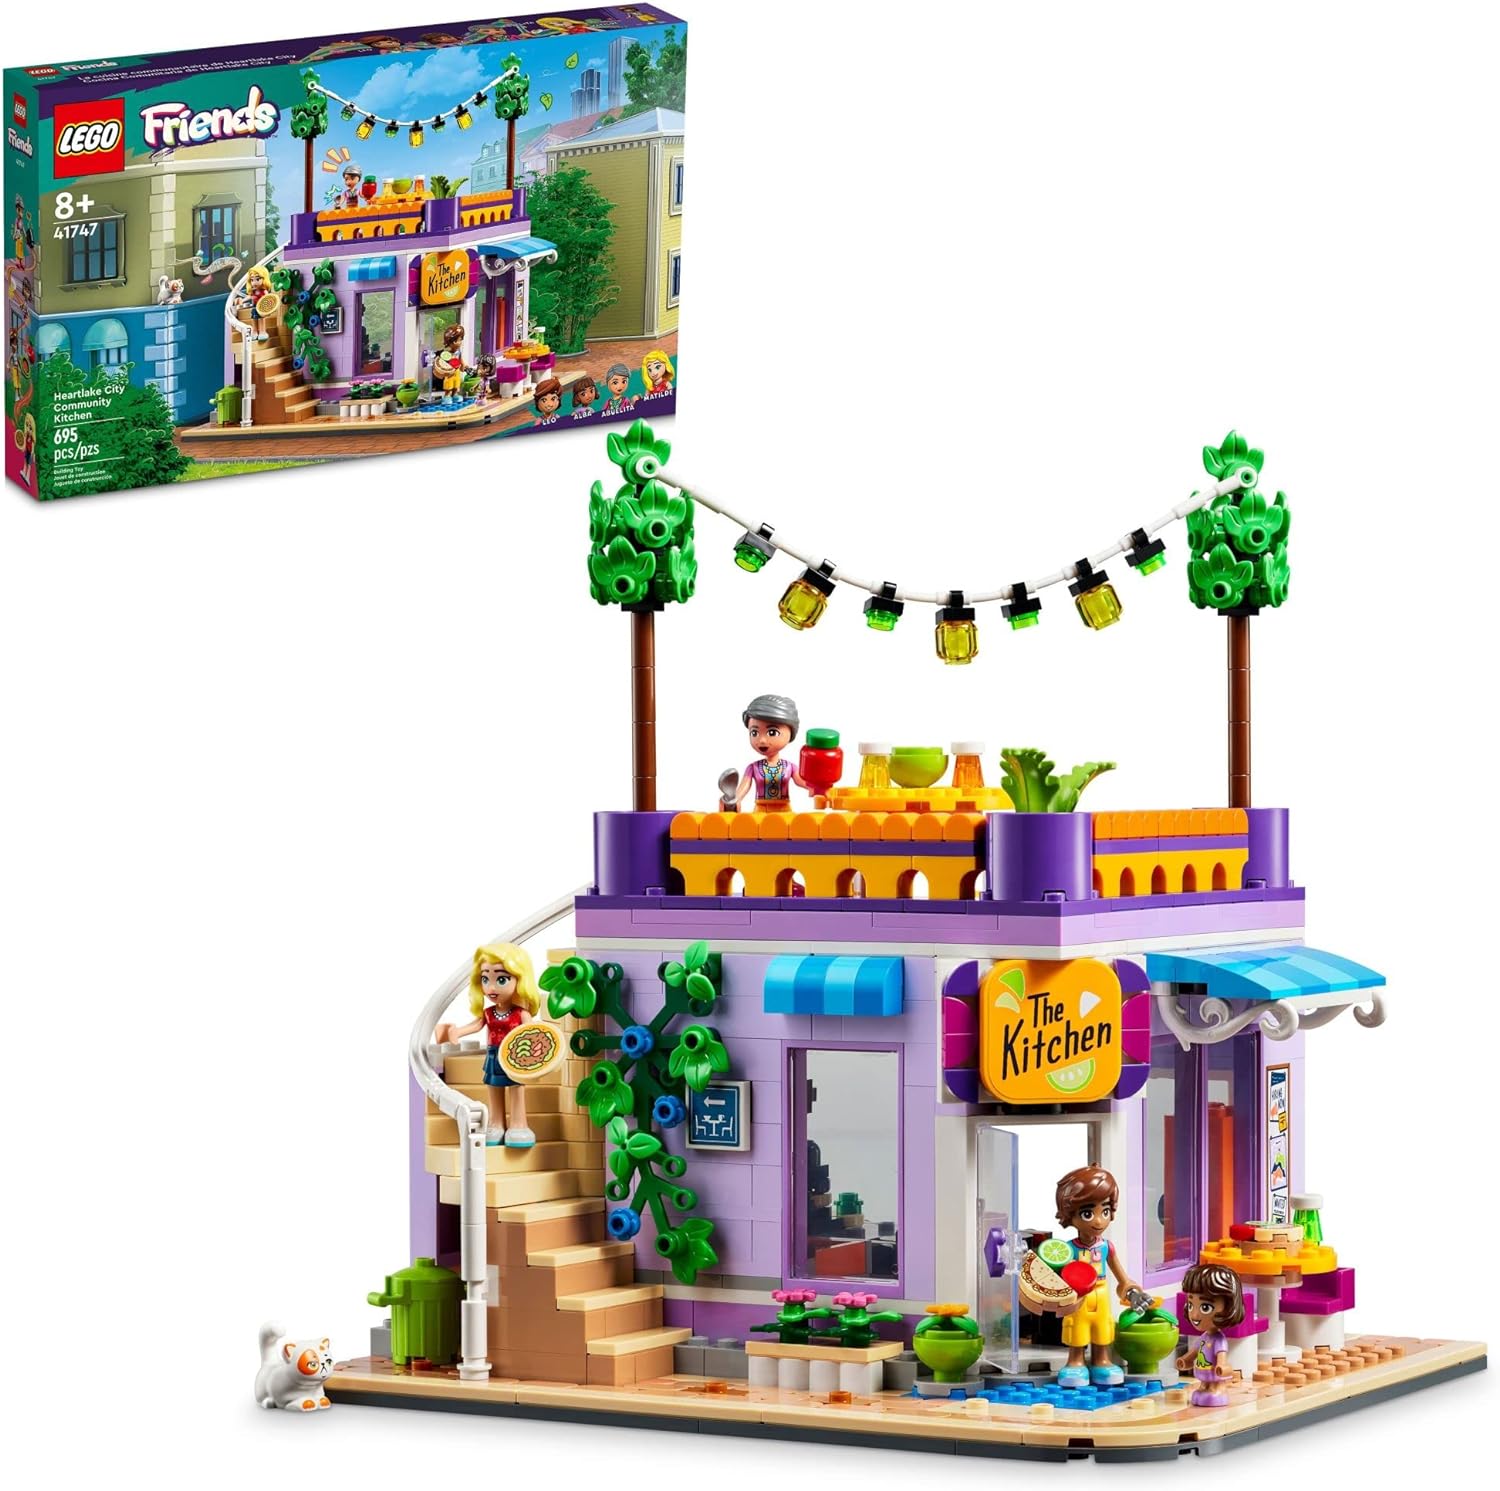 LEGO Friends - Heartlake City Community Kitchen - JKA Toys